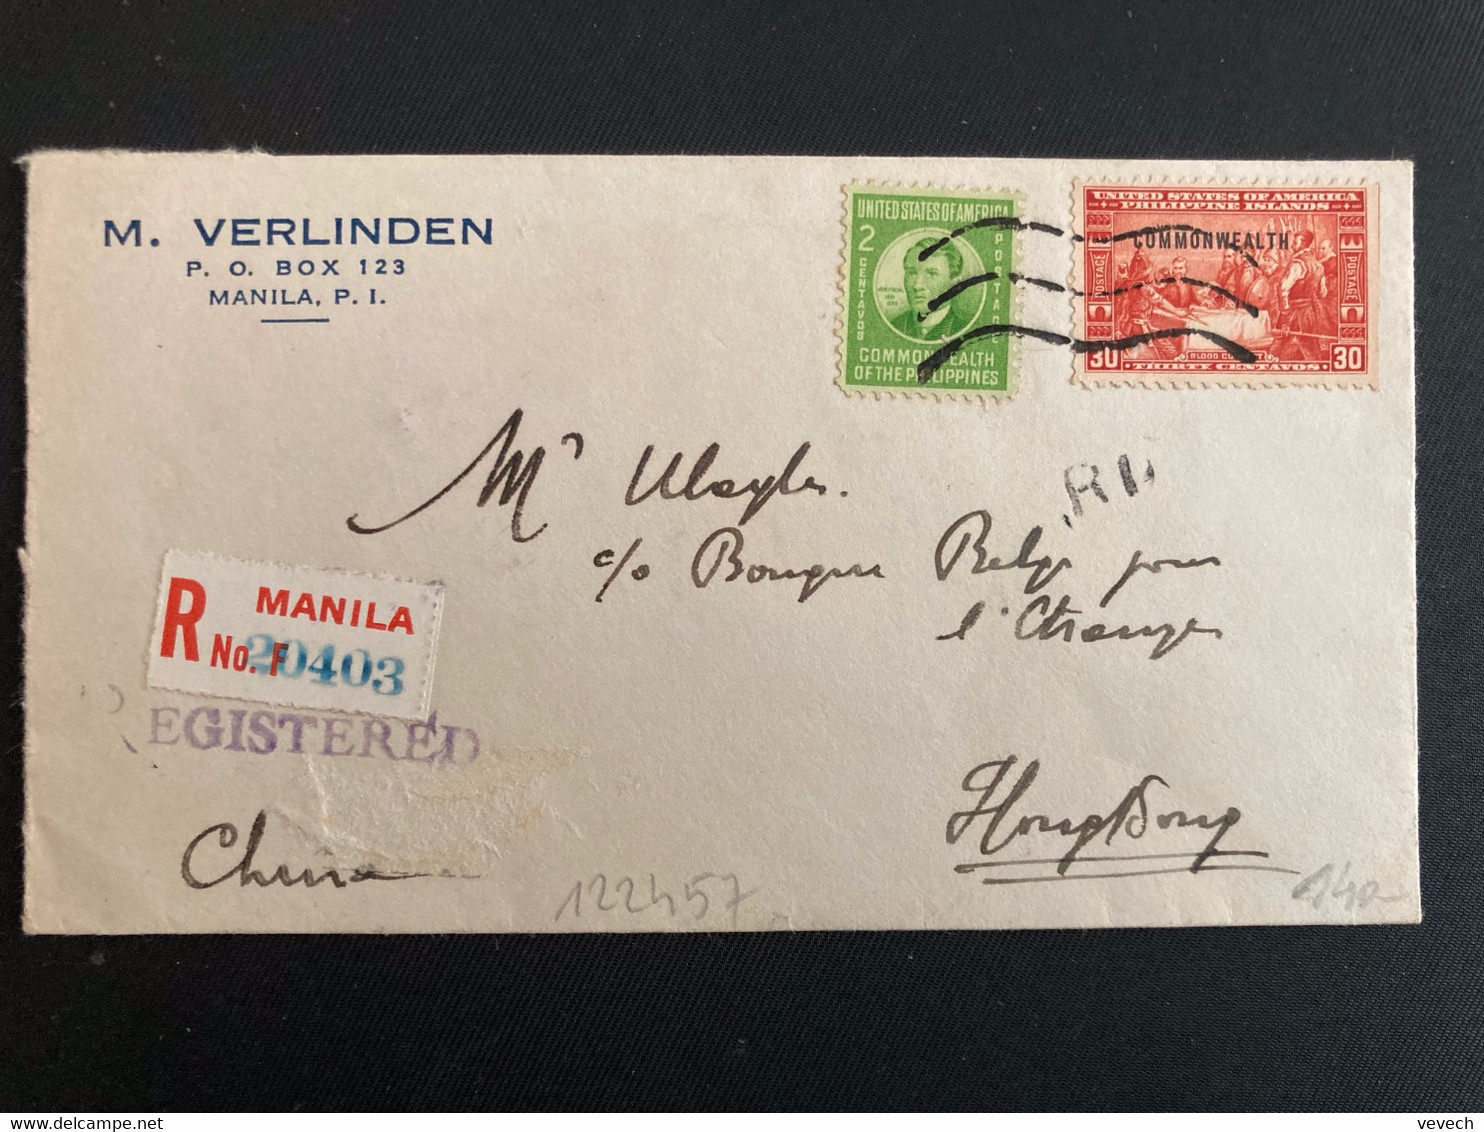 LR Pour HONG KONG CHINE TP 2c + TP 30 Surch. COMMONWEALTH OBL. + JUL 15 1941 REGISTERED + VERLINDEN MANILA - Philippines